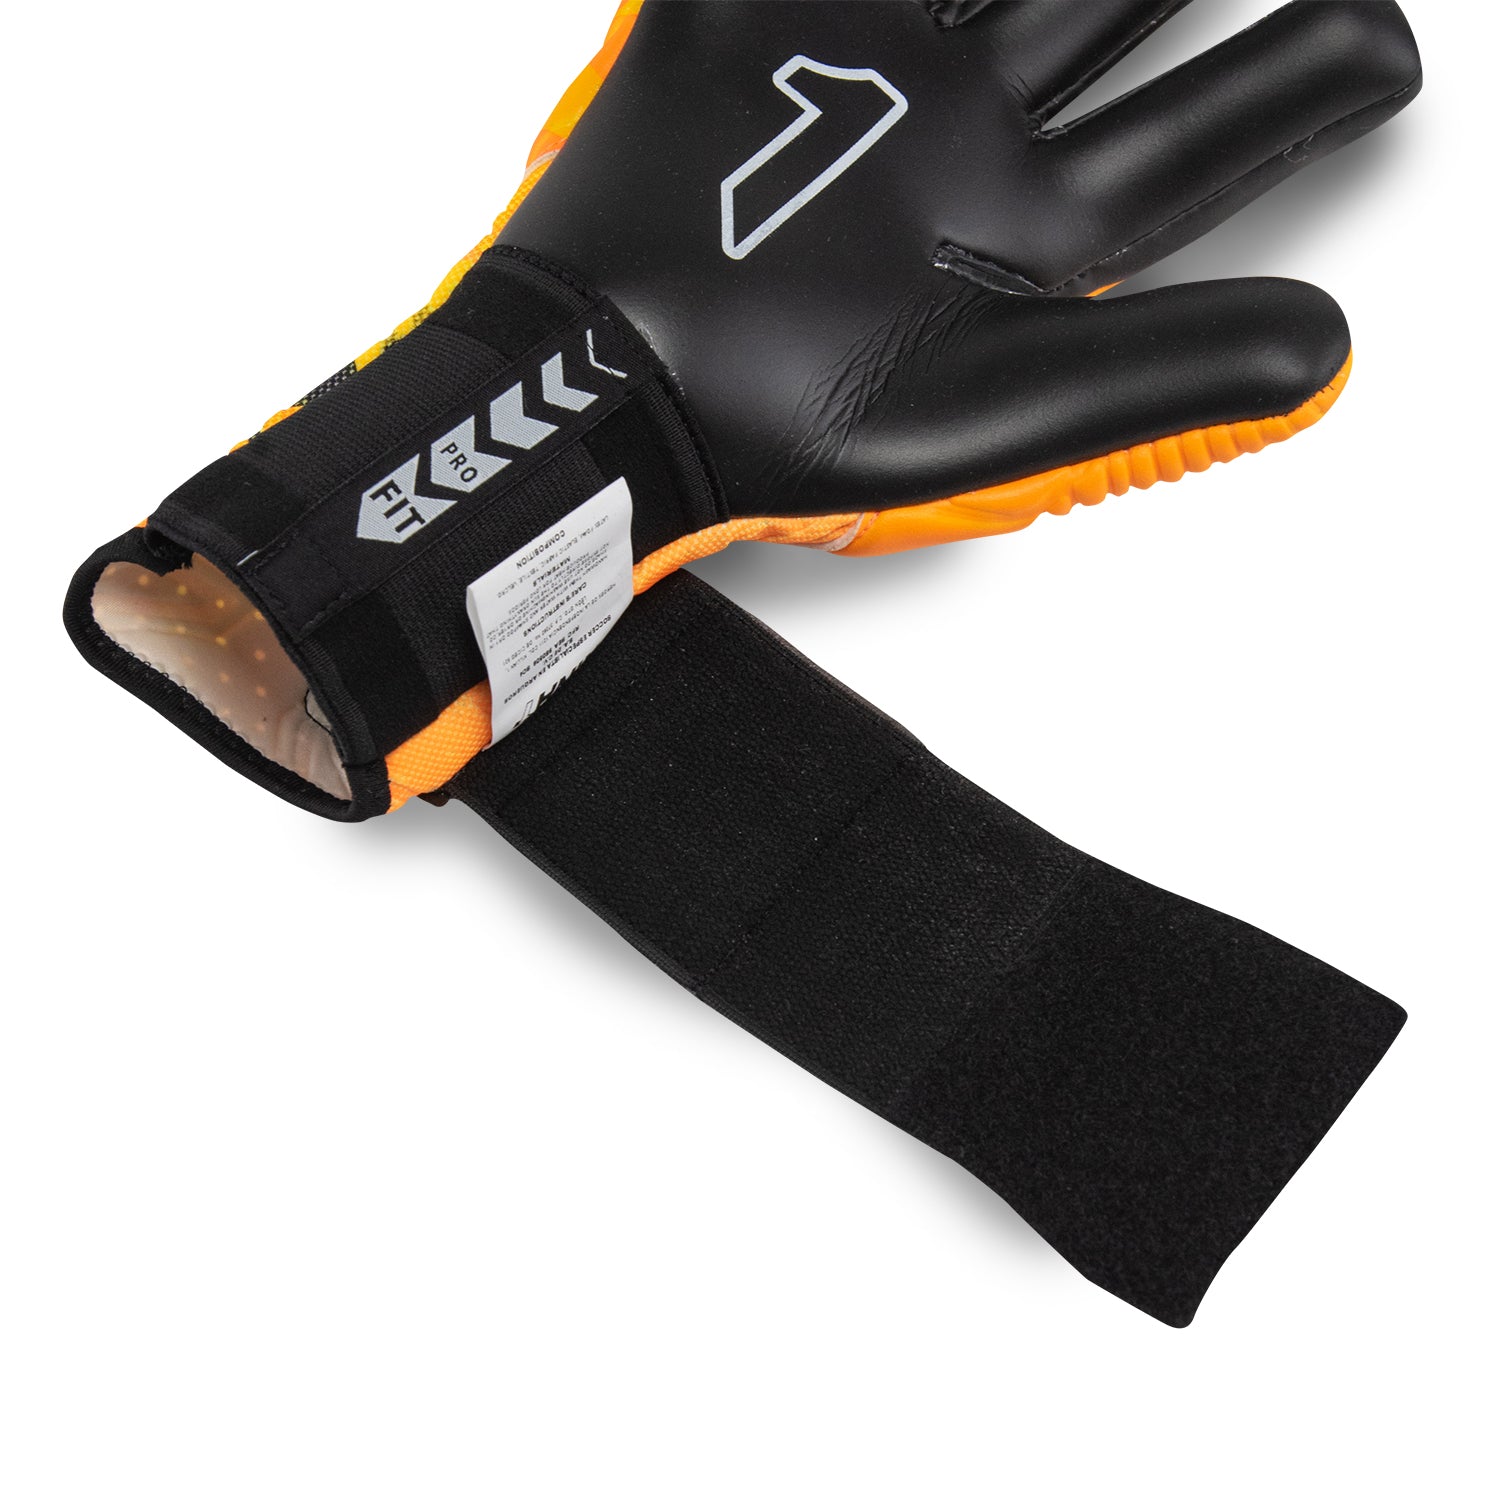 Rinat Meta Tactik PRO SPINES (Removable Finger Protection) Goalkeeper Glove